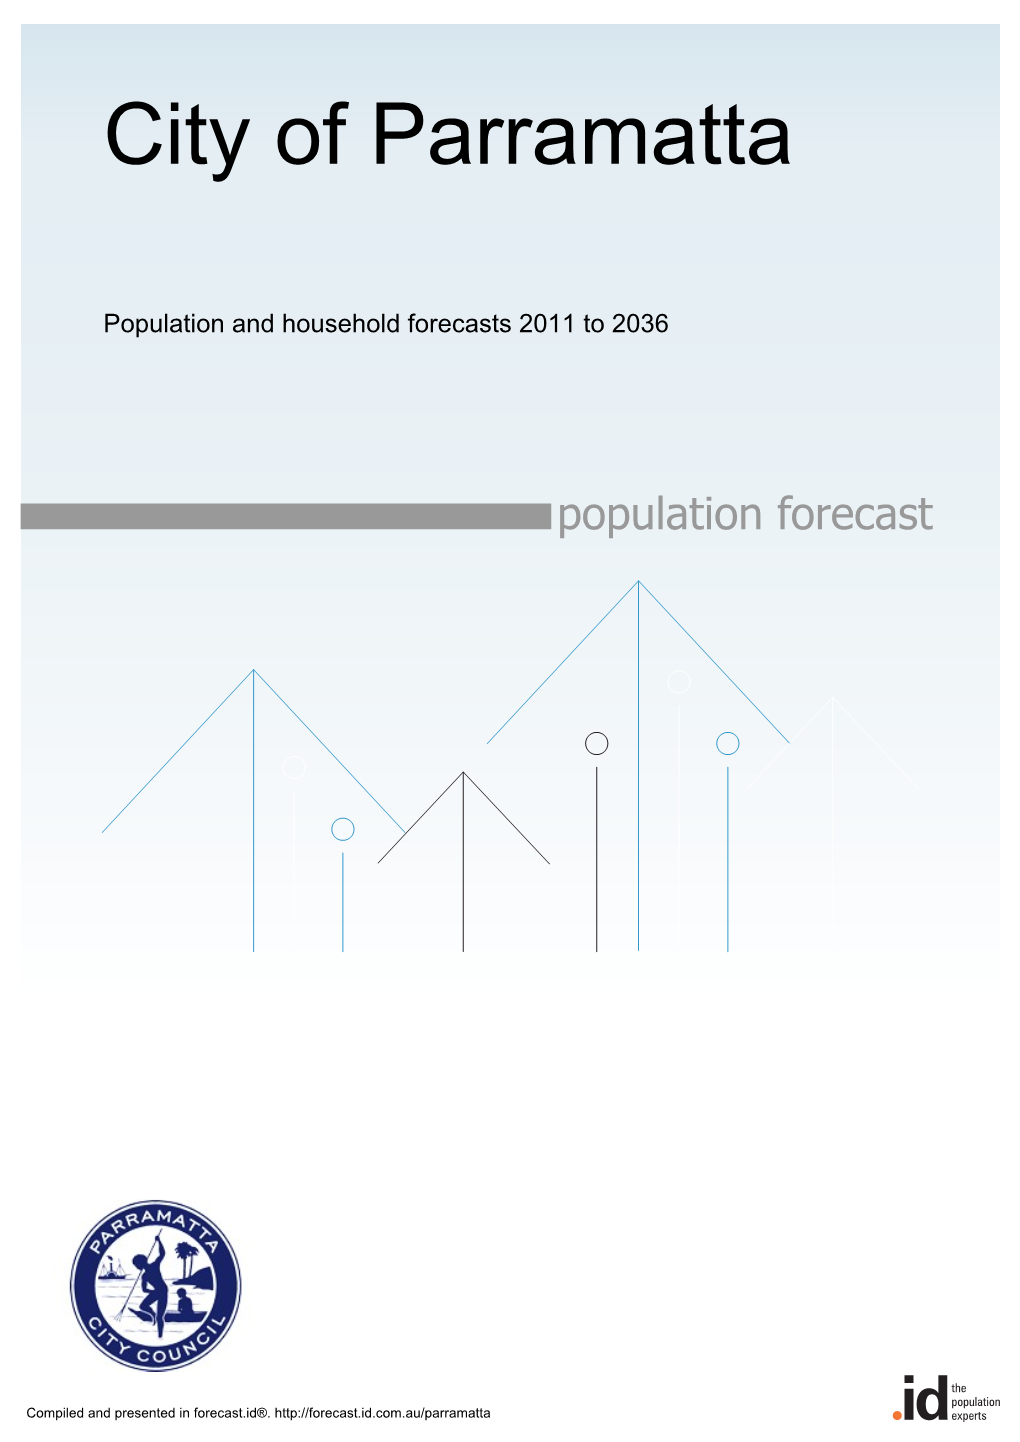 Population Forecast